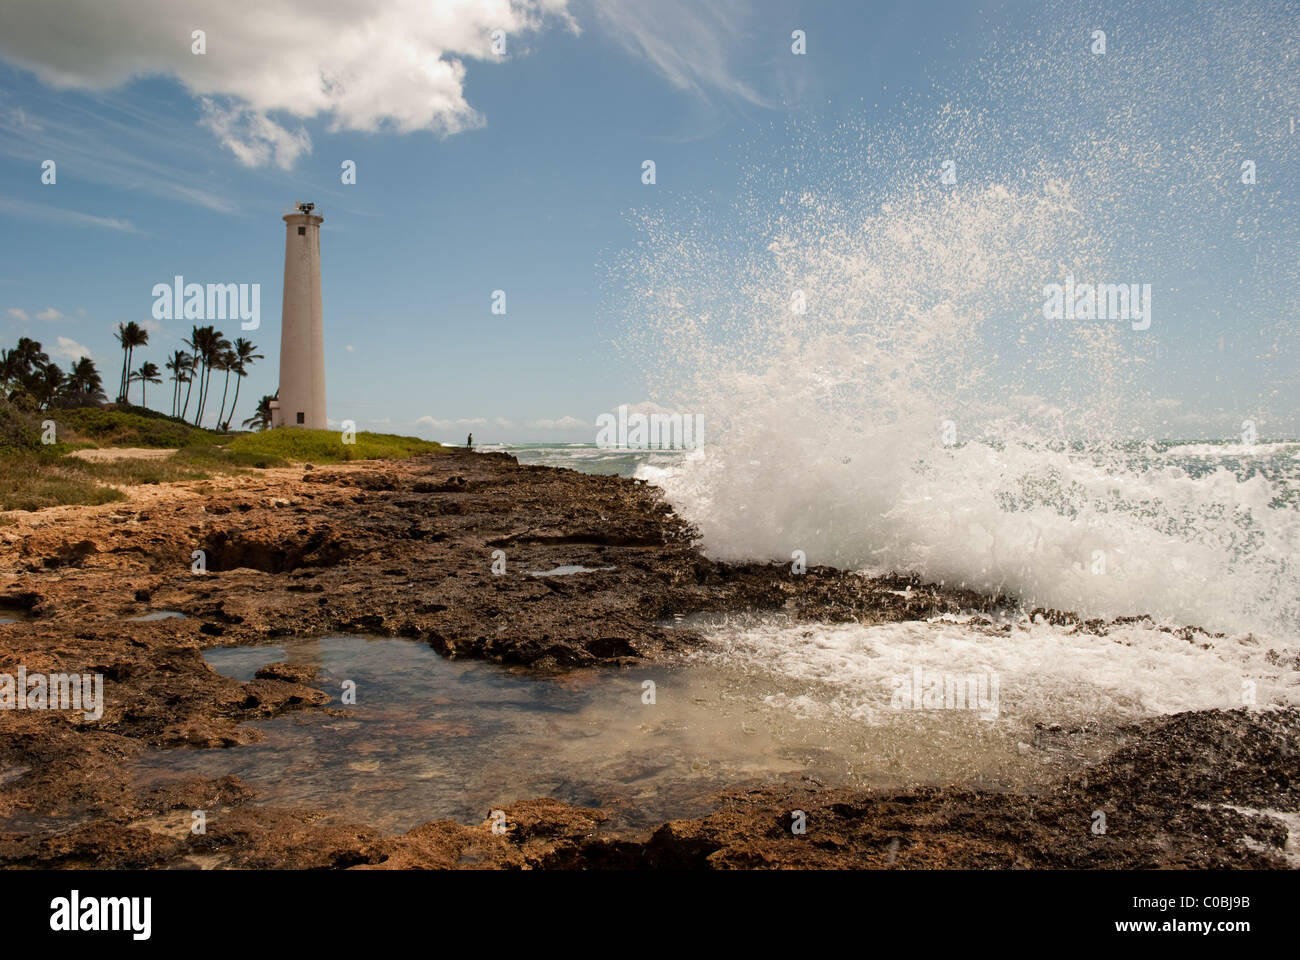 Large wave crashing into rocky coast. Barber's Point Lighthouse, Oahu Hawaii. Stock Photo